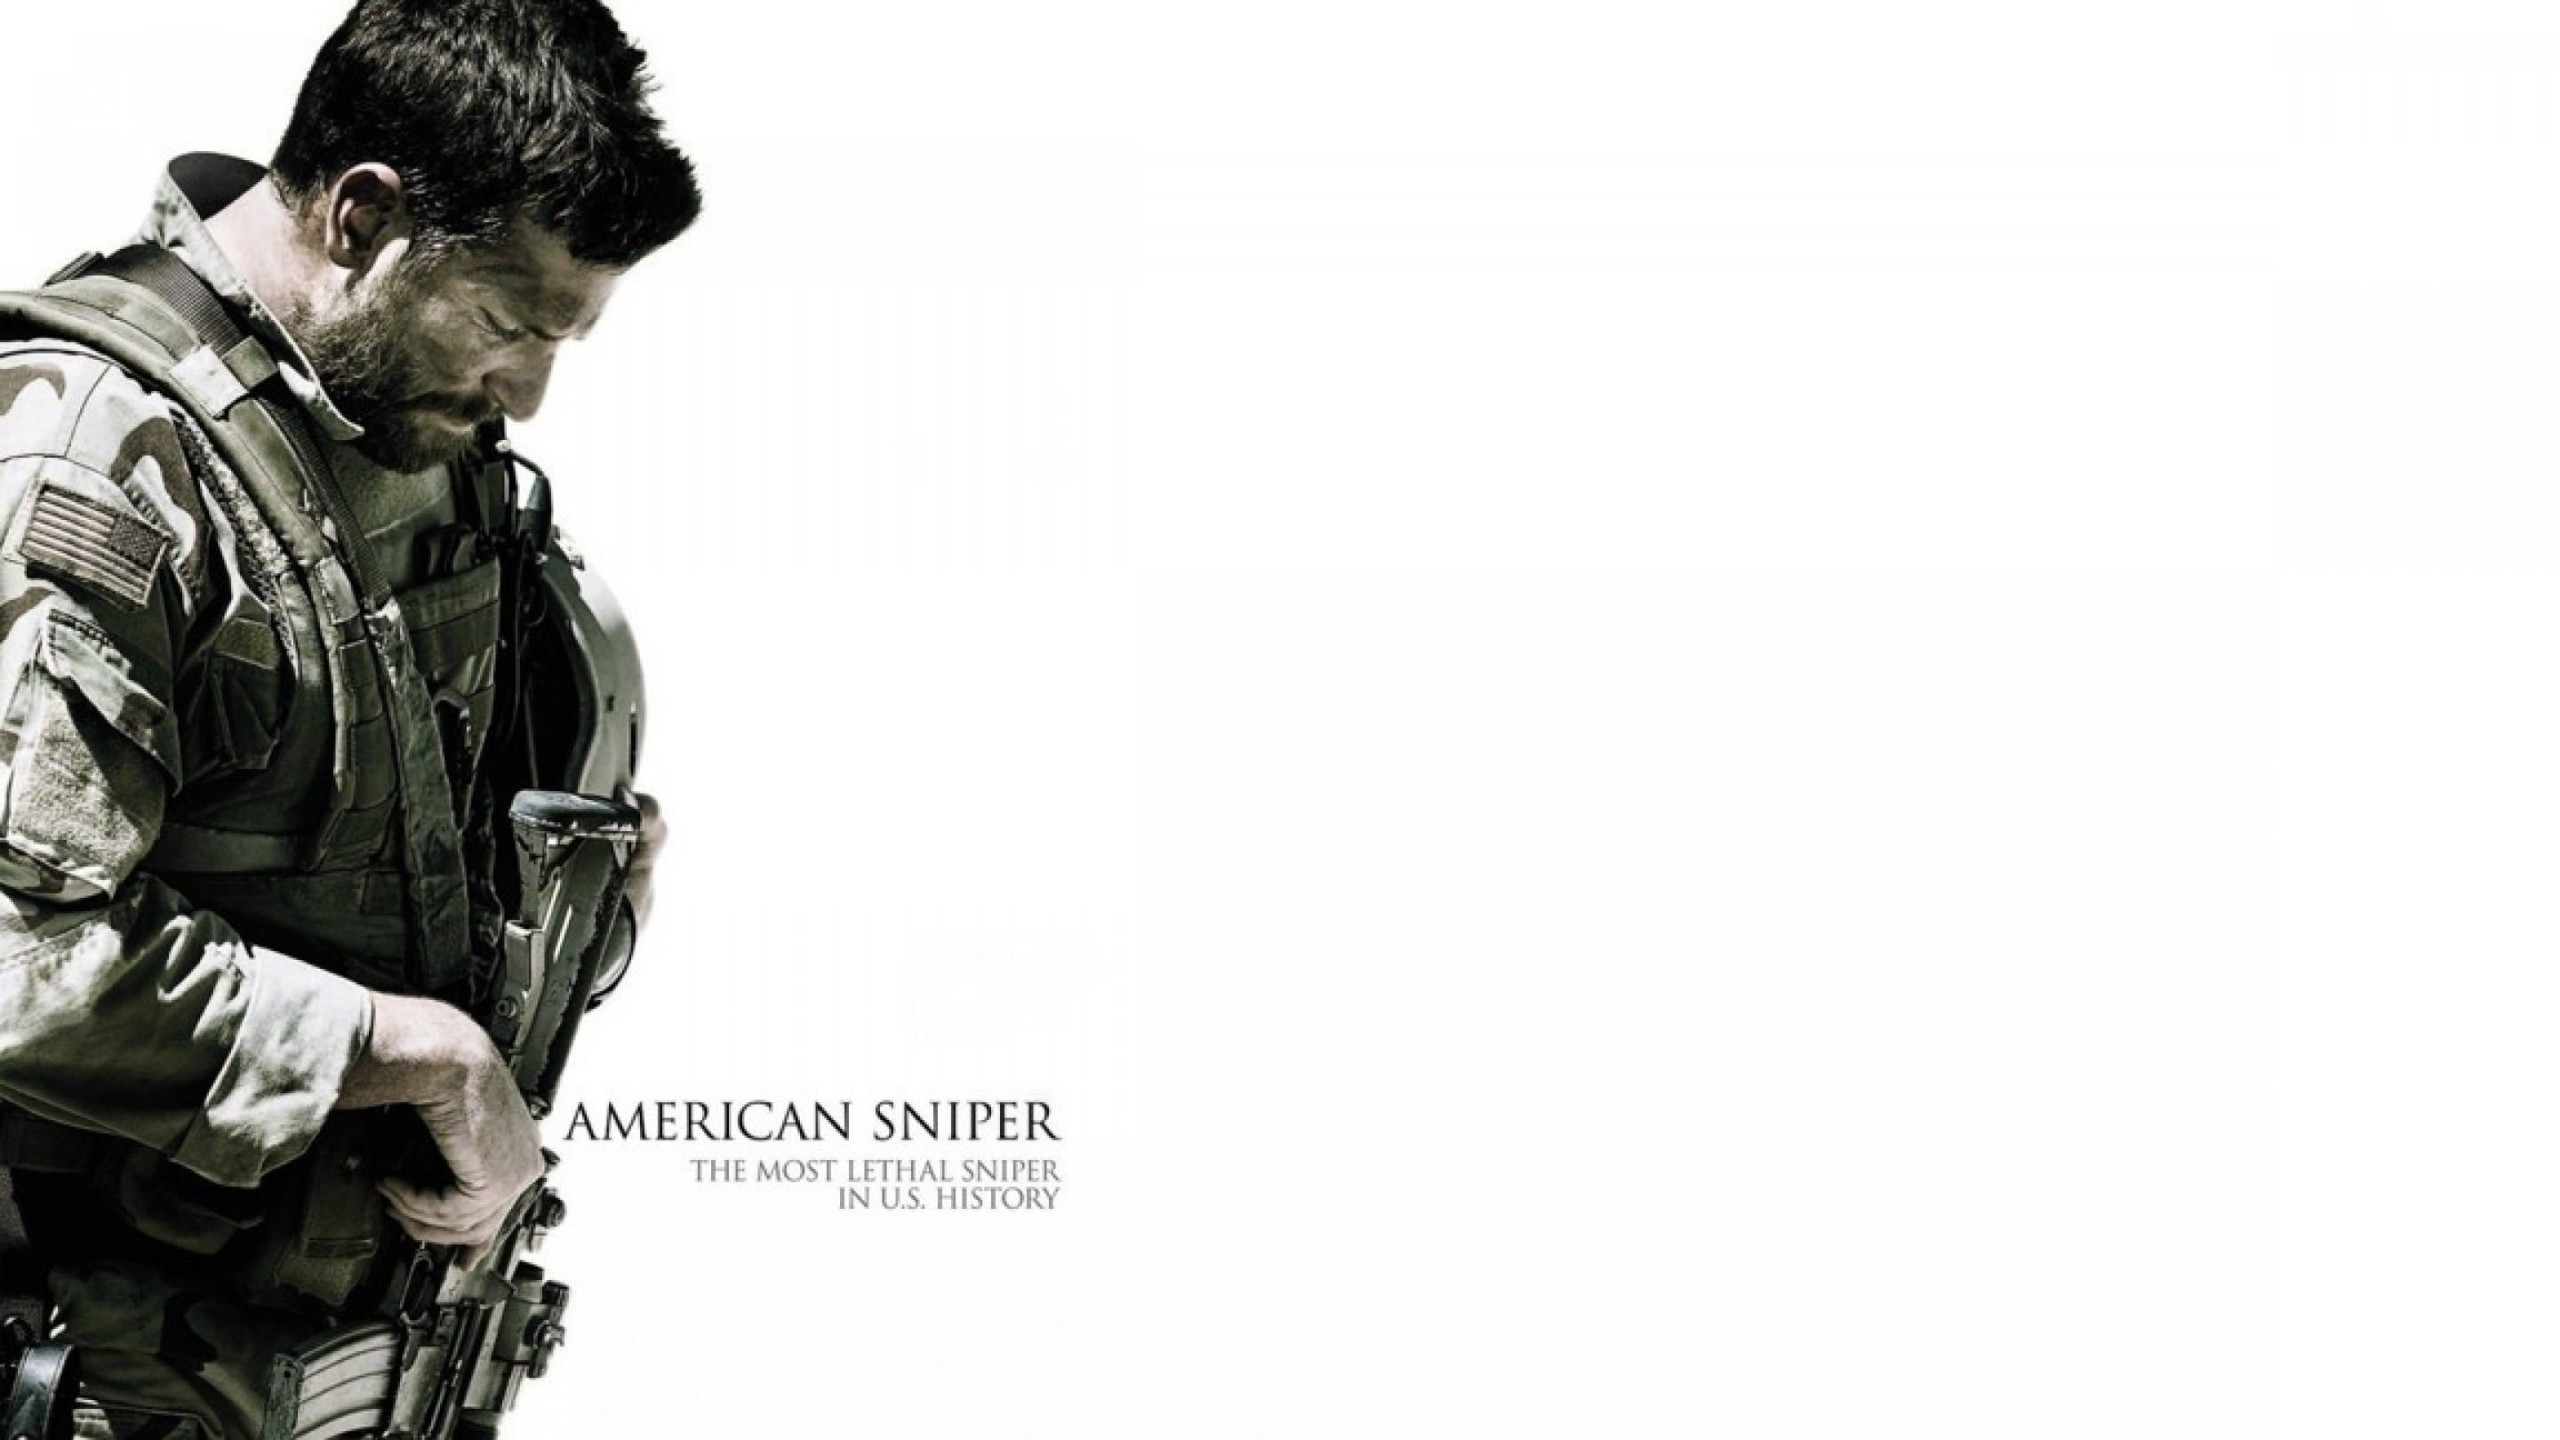 Bradley Cooper As Chris Kyle in American sniper Wallpaper for Desktop 2560x1440